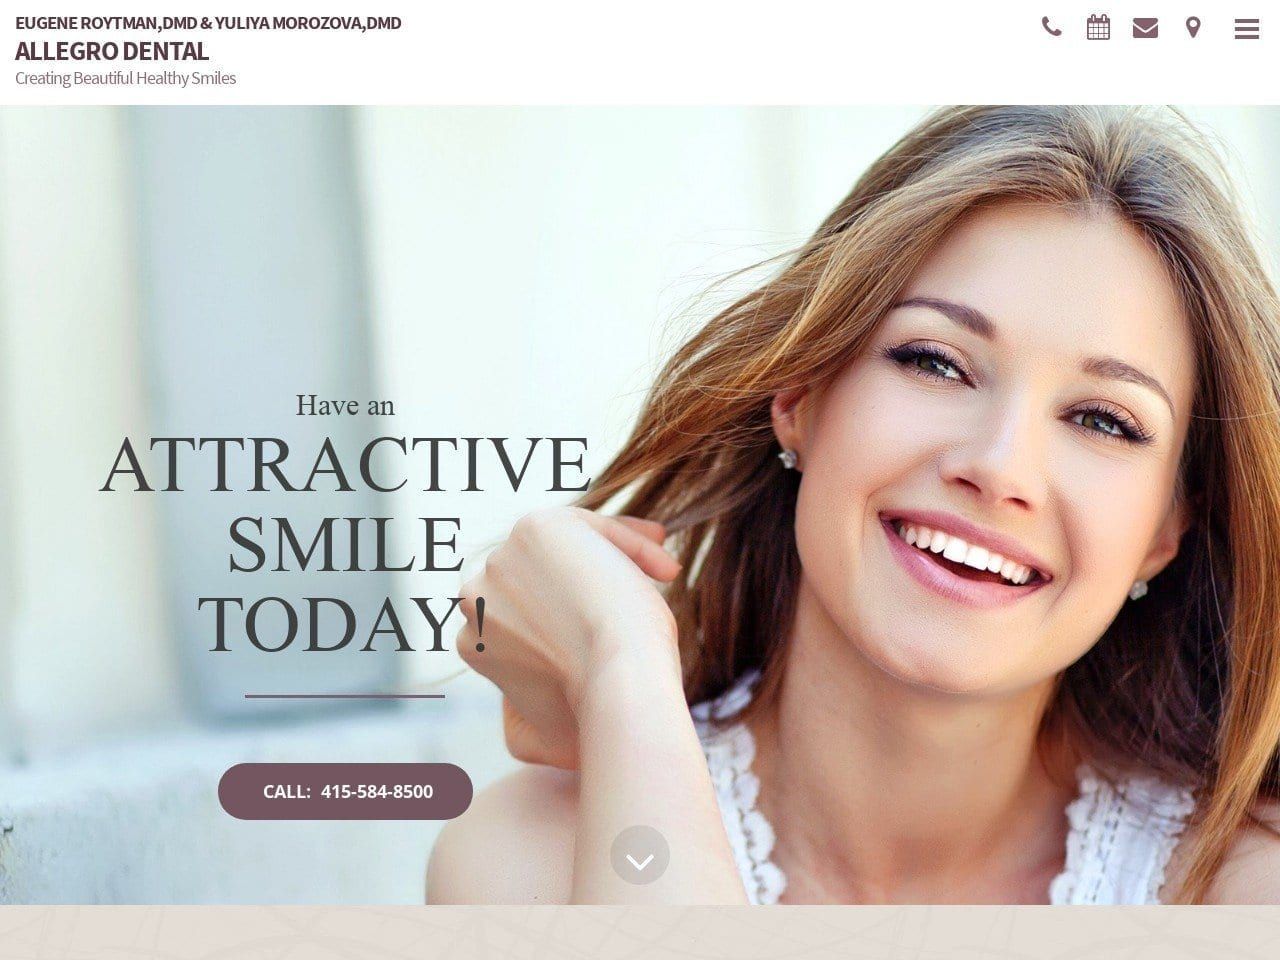 Allegro Dental Group Website Screenshot from allegrodental.com